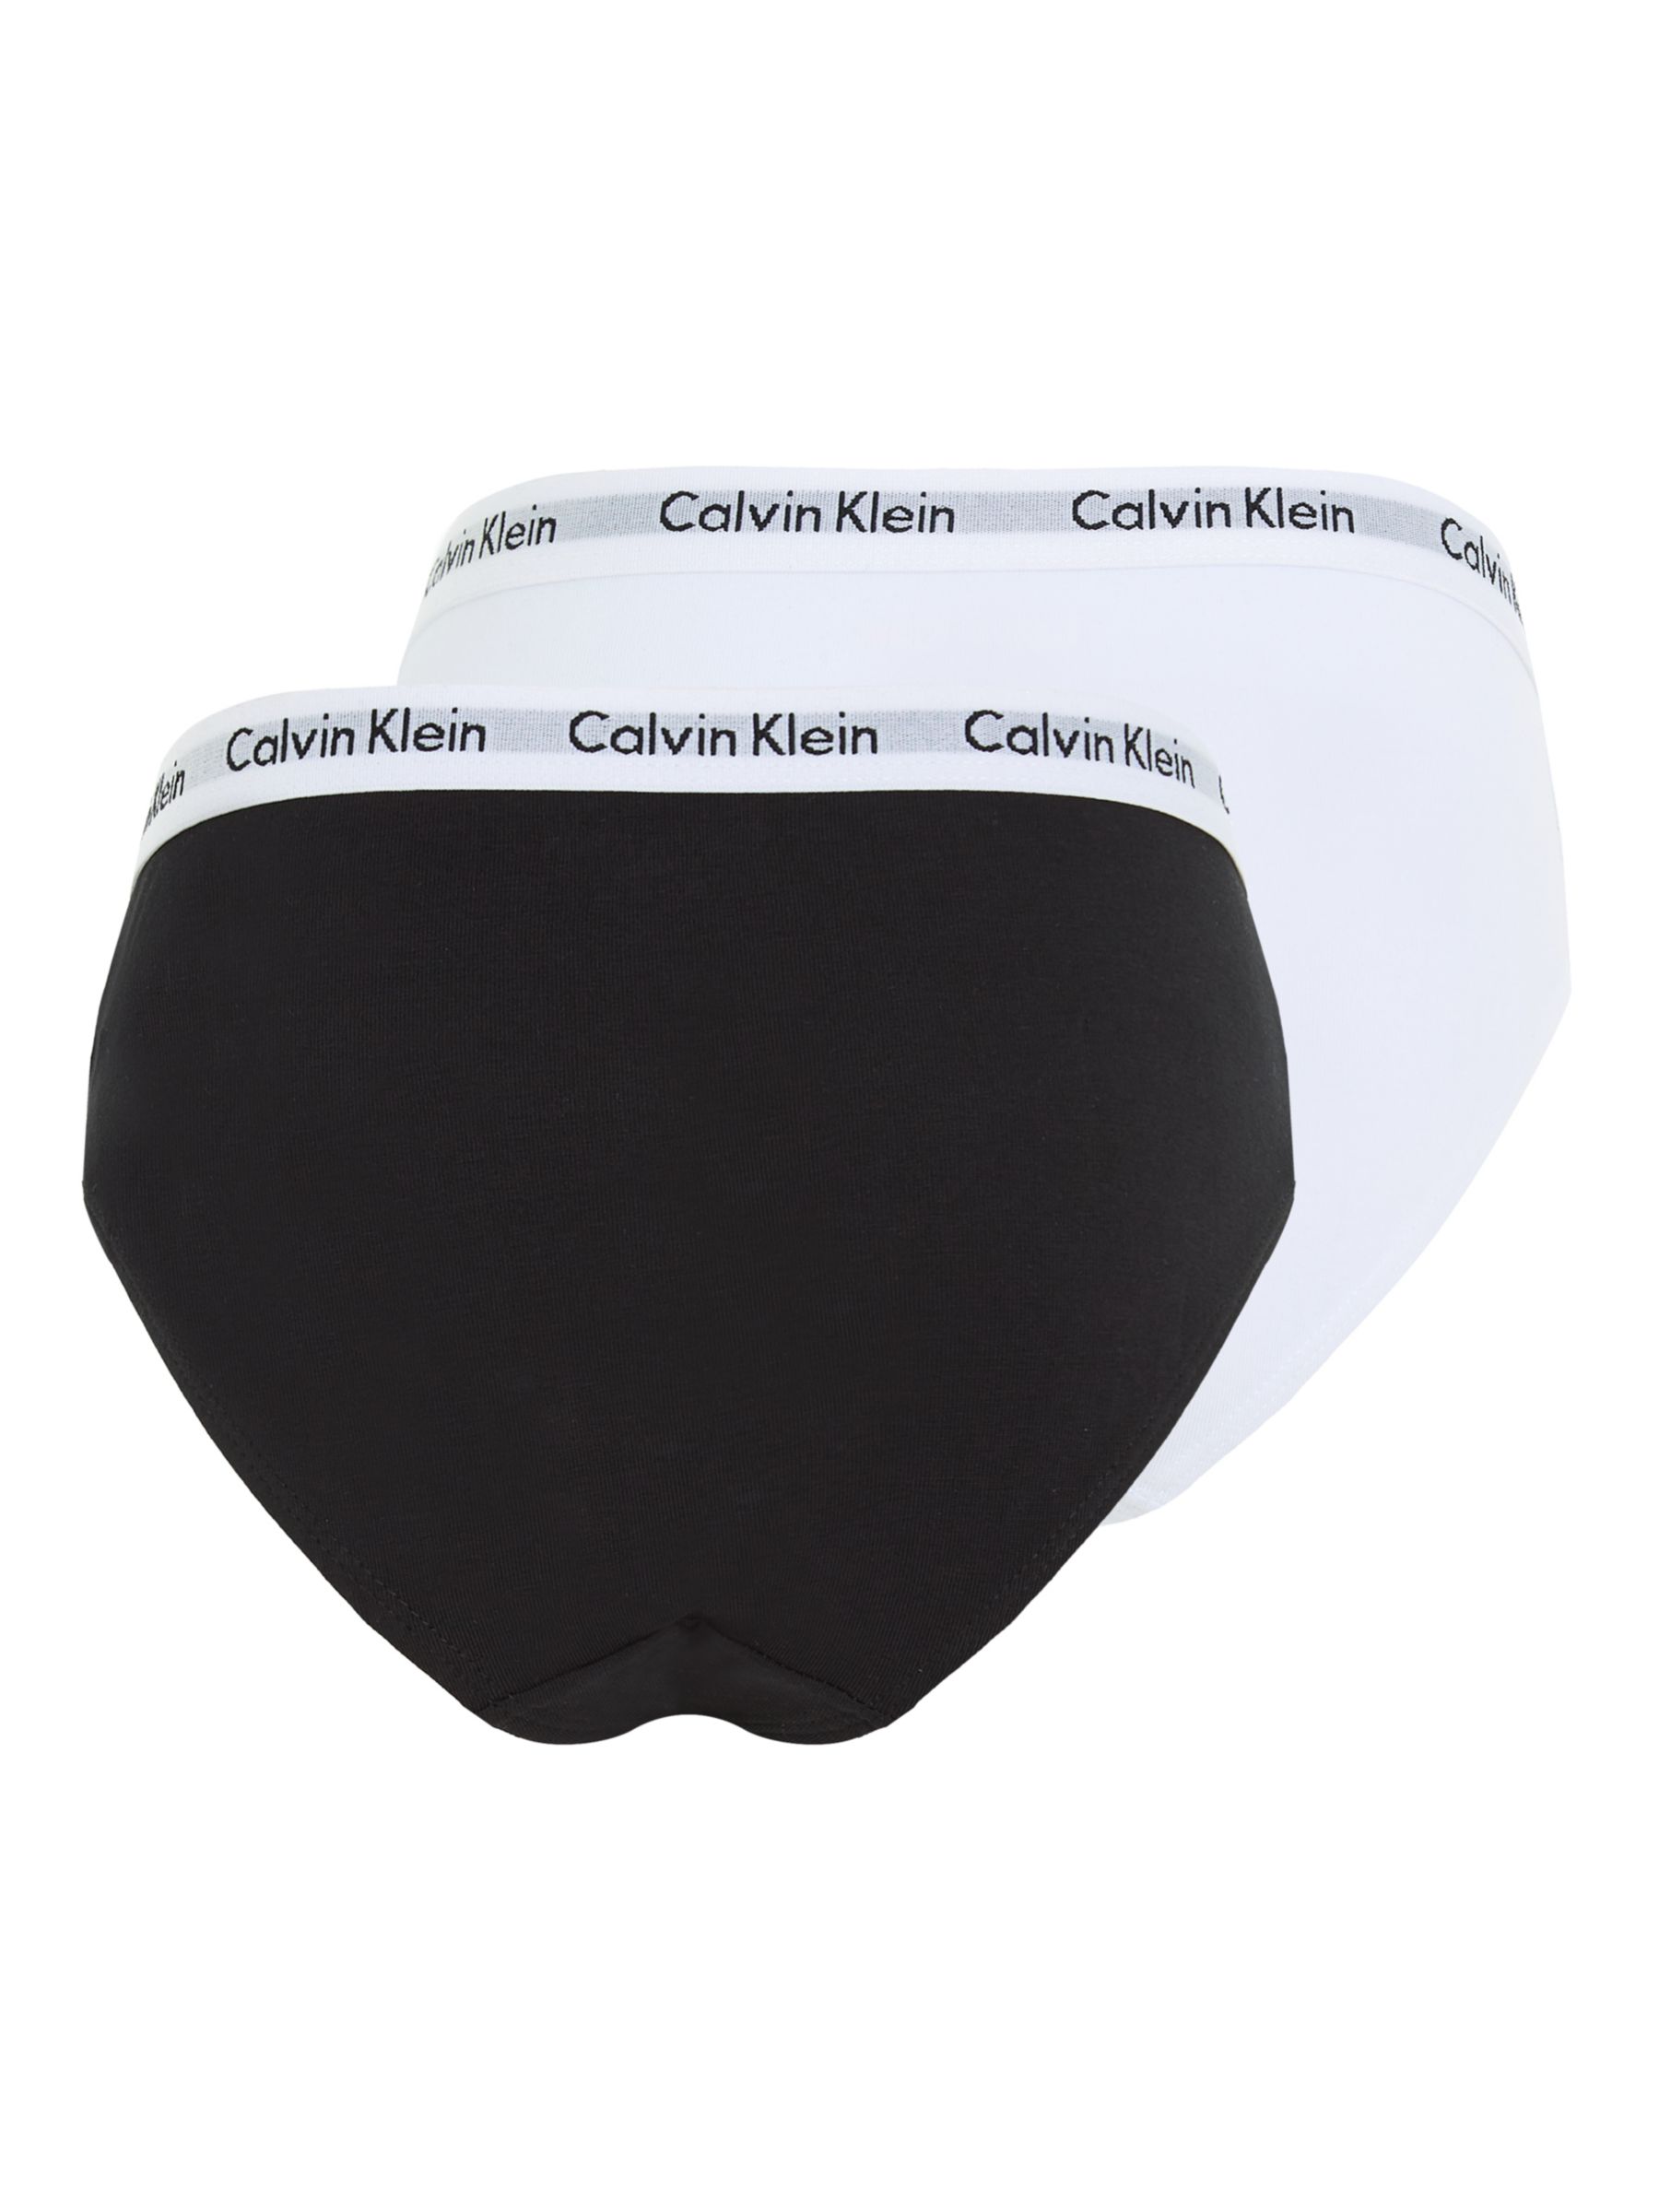 Calvin Klein Kids' Bikini Briefs, Pack of 2, Black/White, 10-12 years